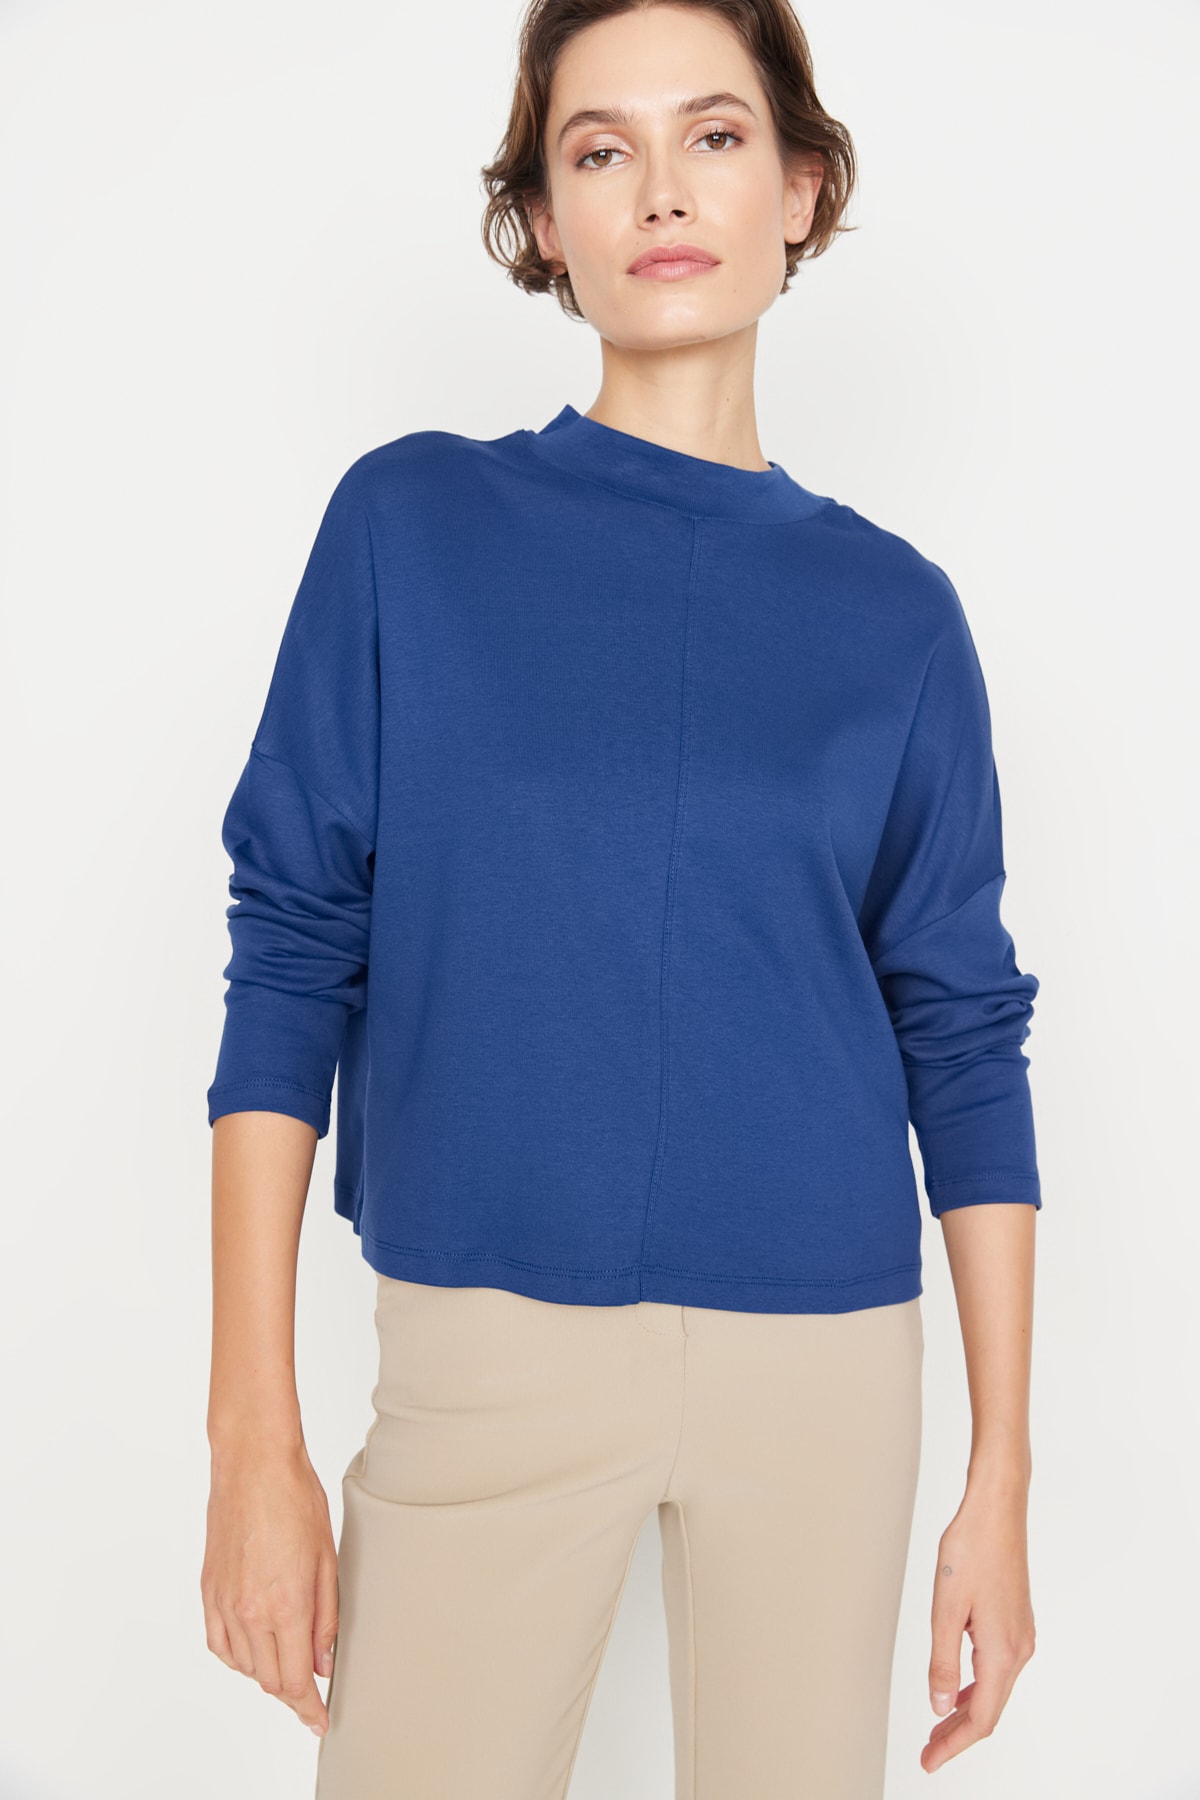 Trendyol Collection T-Shirt Blau Relaxed Fit Fast ausverkauft